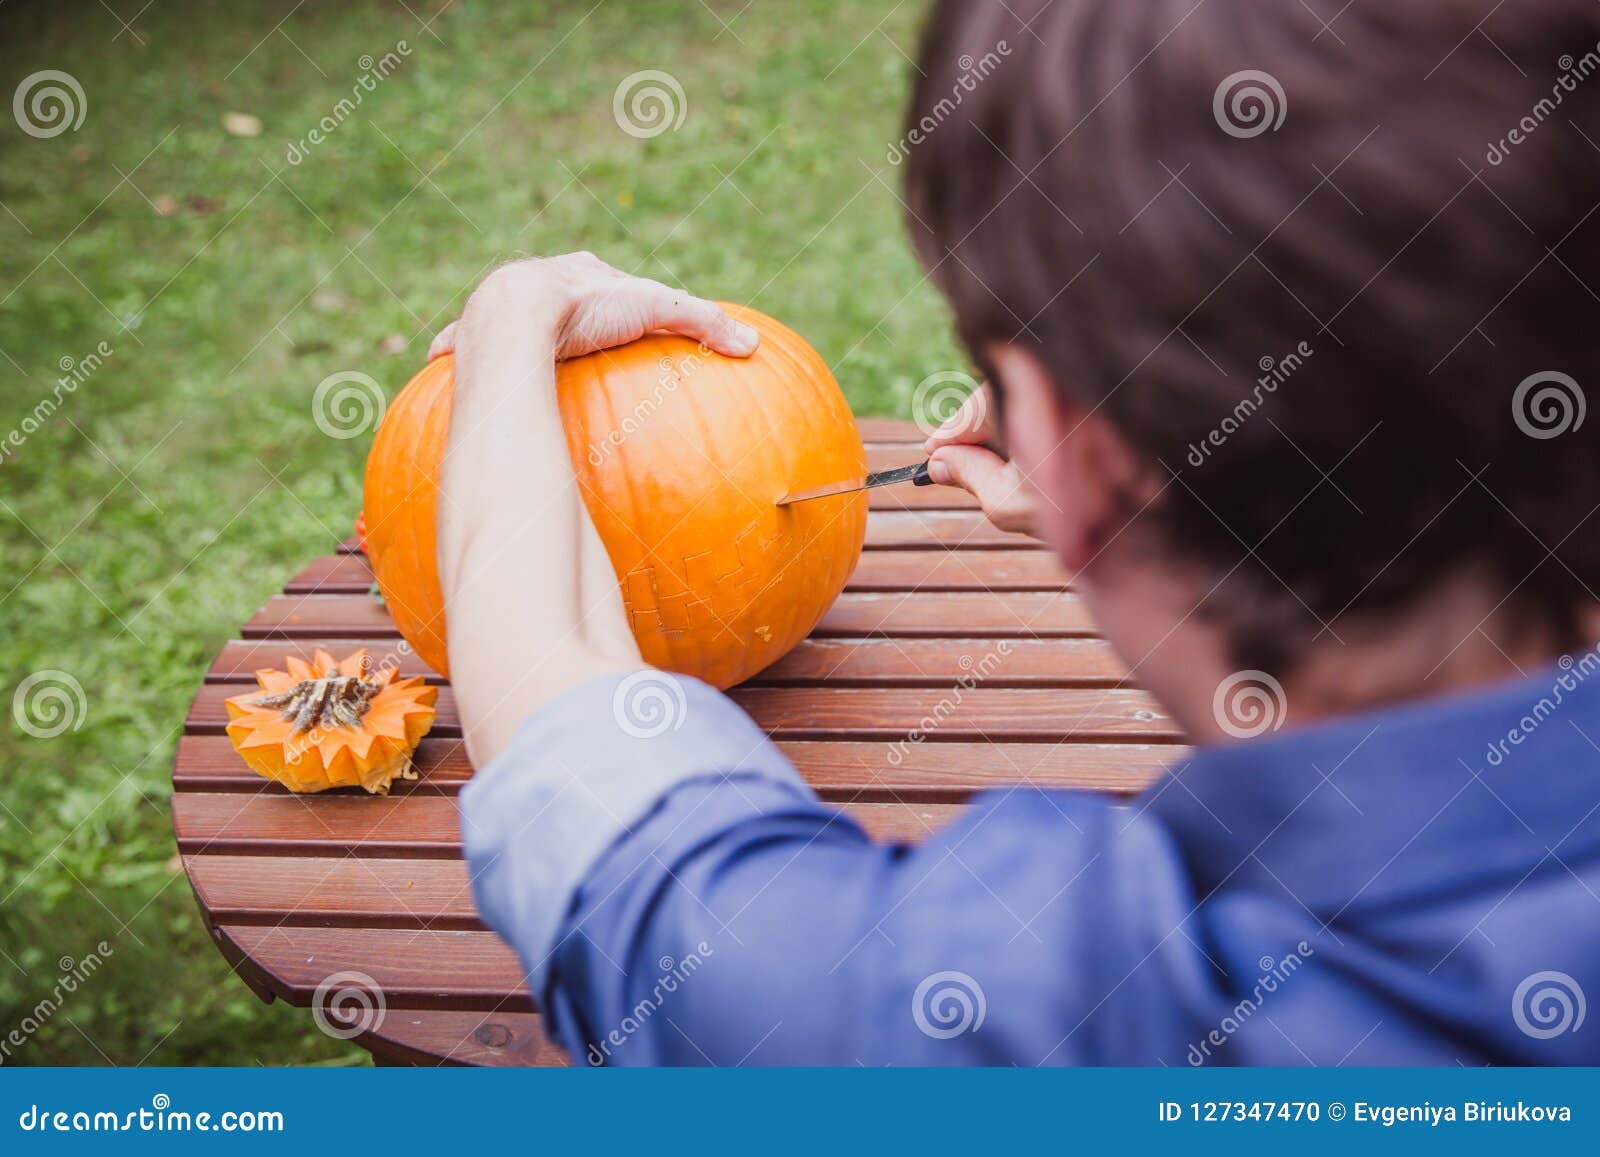 happy halloween. man carving big pumpkin jack o lanterns for halloween outside. close-up